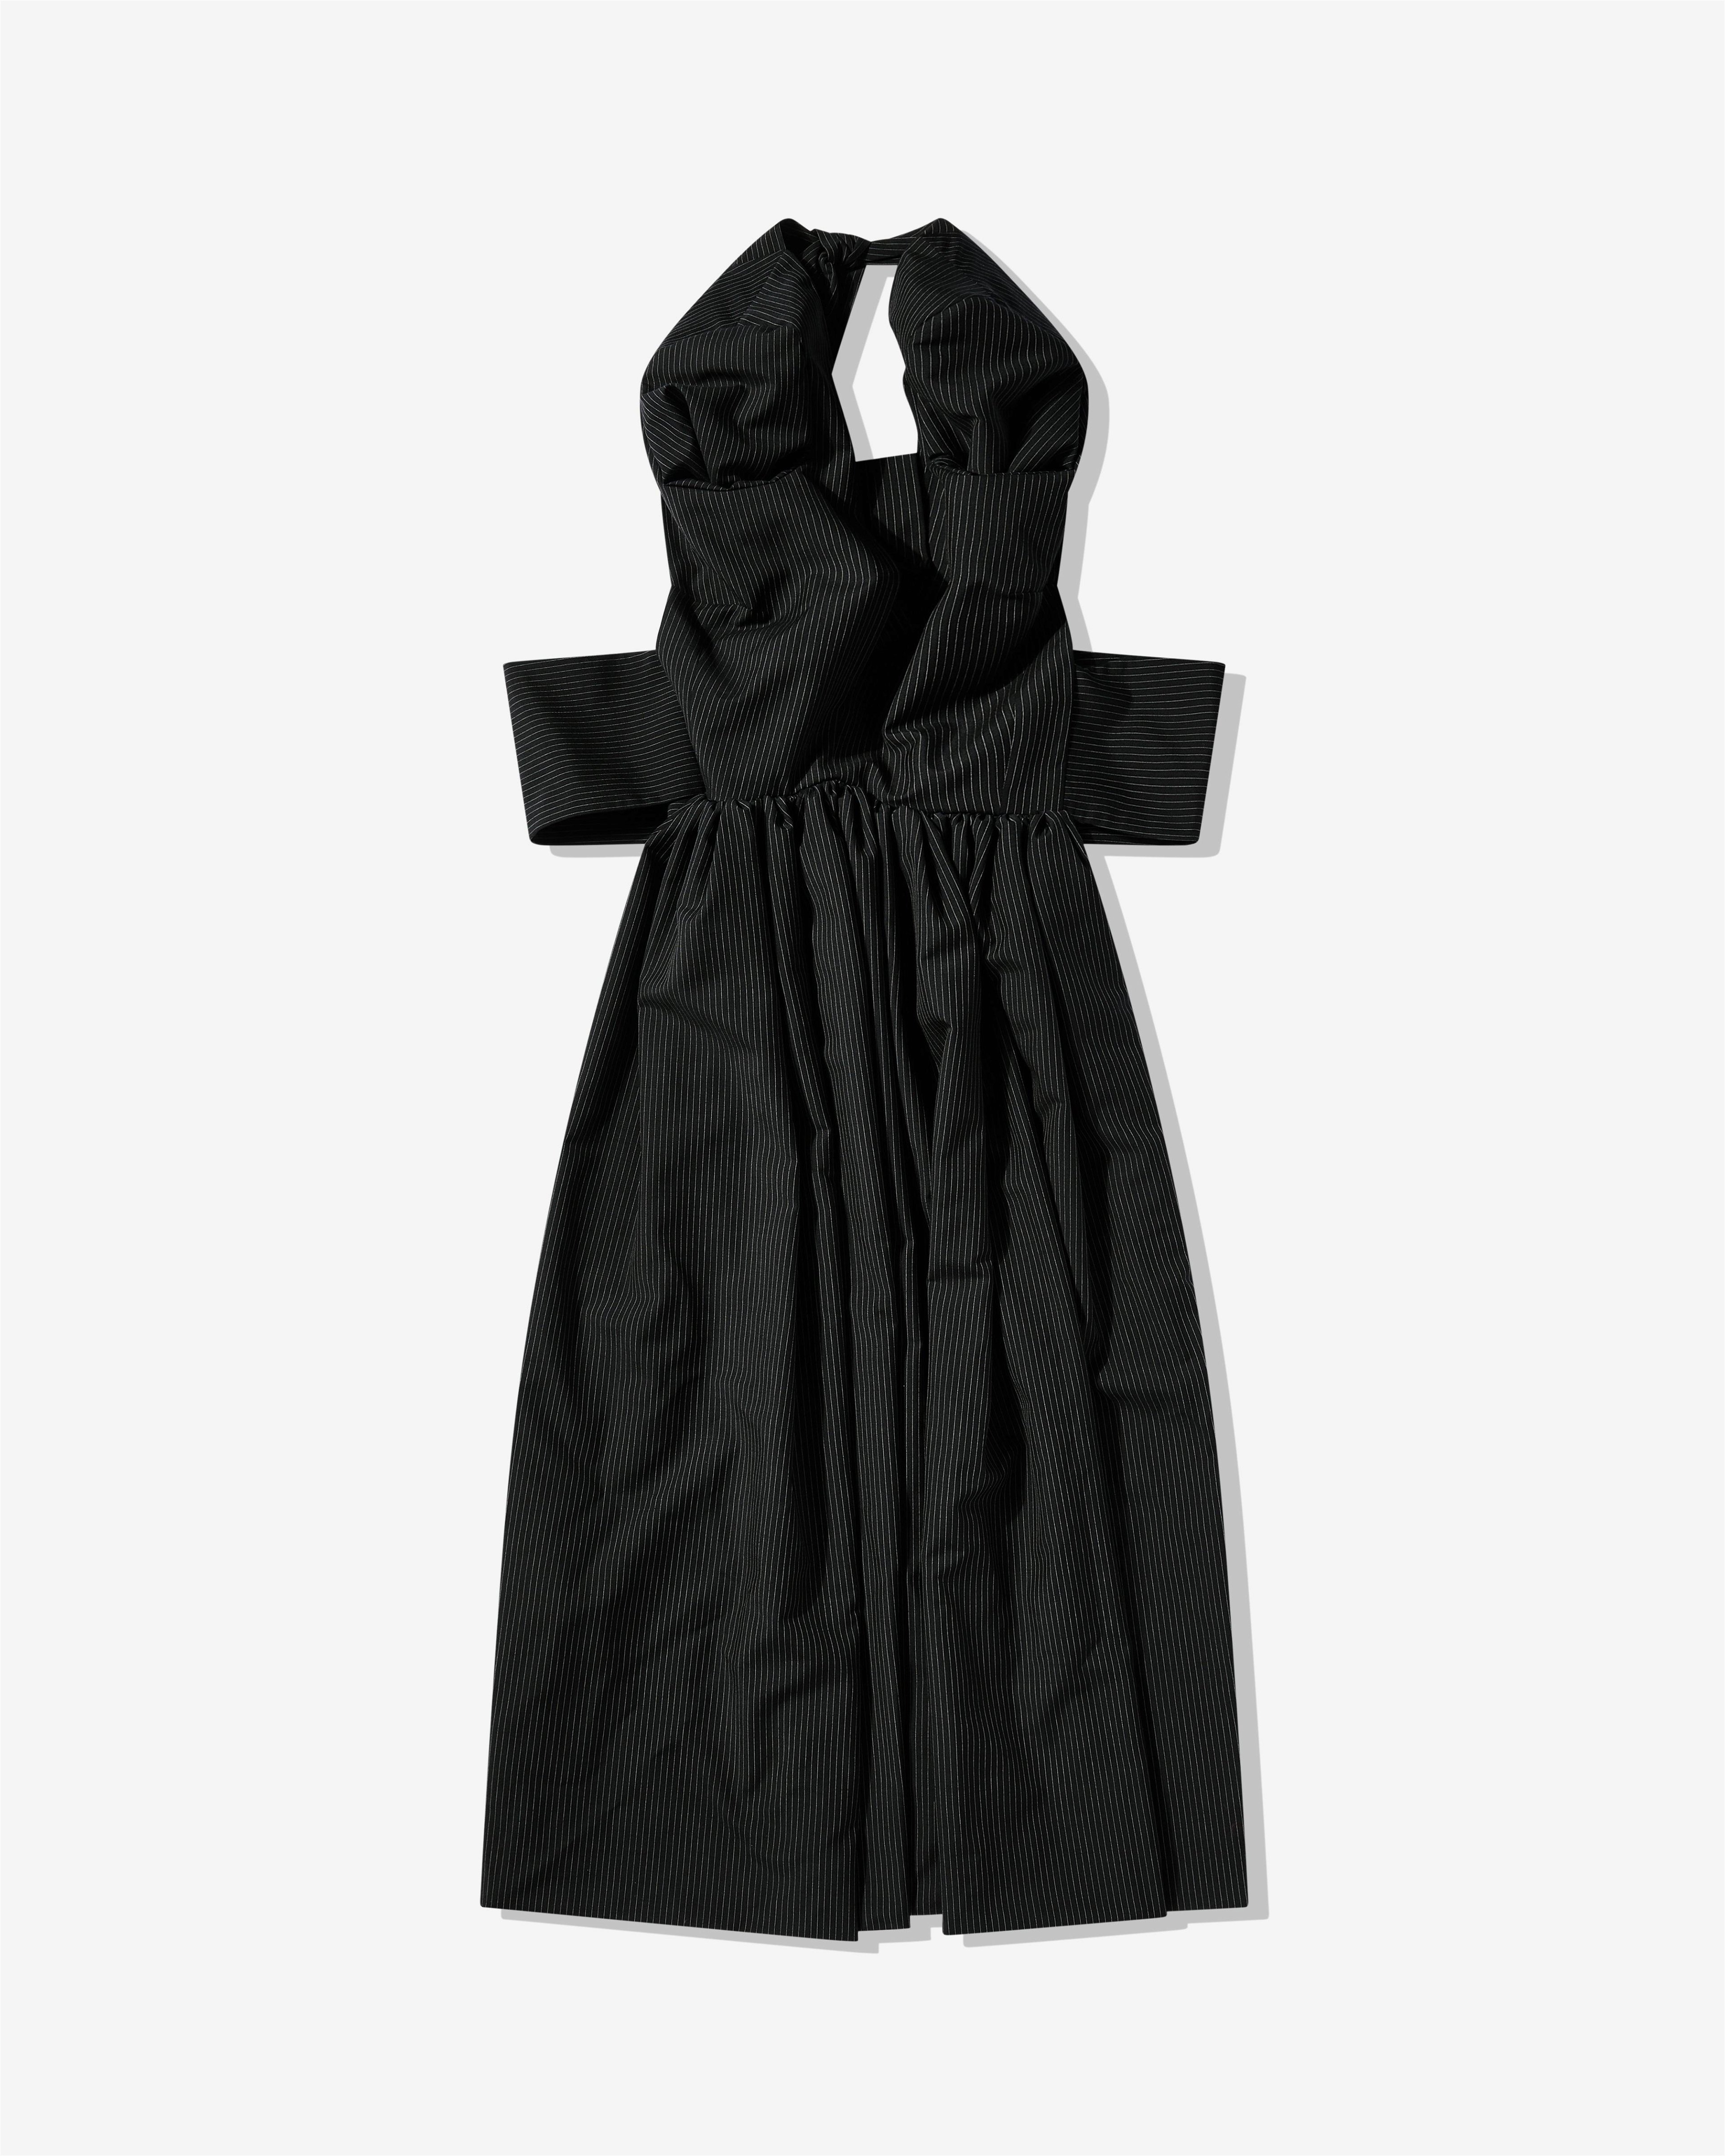 Torisheju - Women's 9 Tye Dress - (Black) by TORISHEJU